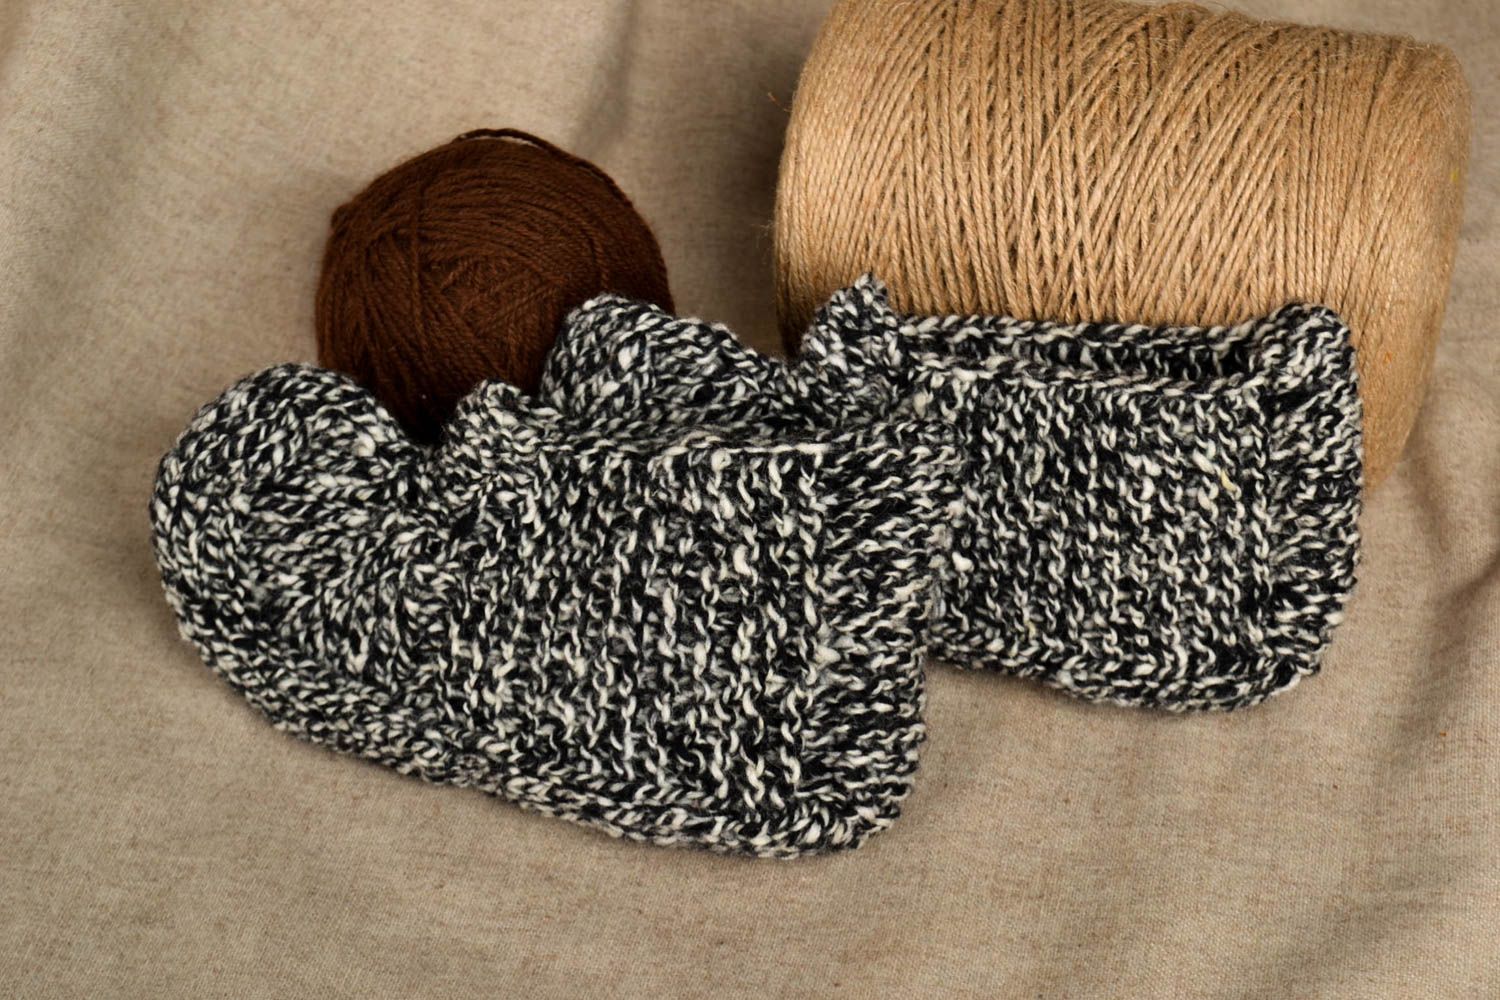 Stylish handmade crochet slippers crochet wool socks house shoes small gifts photo 1